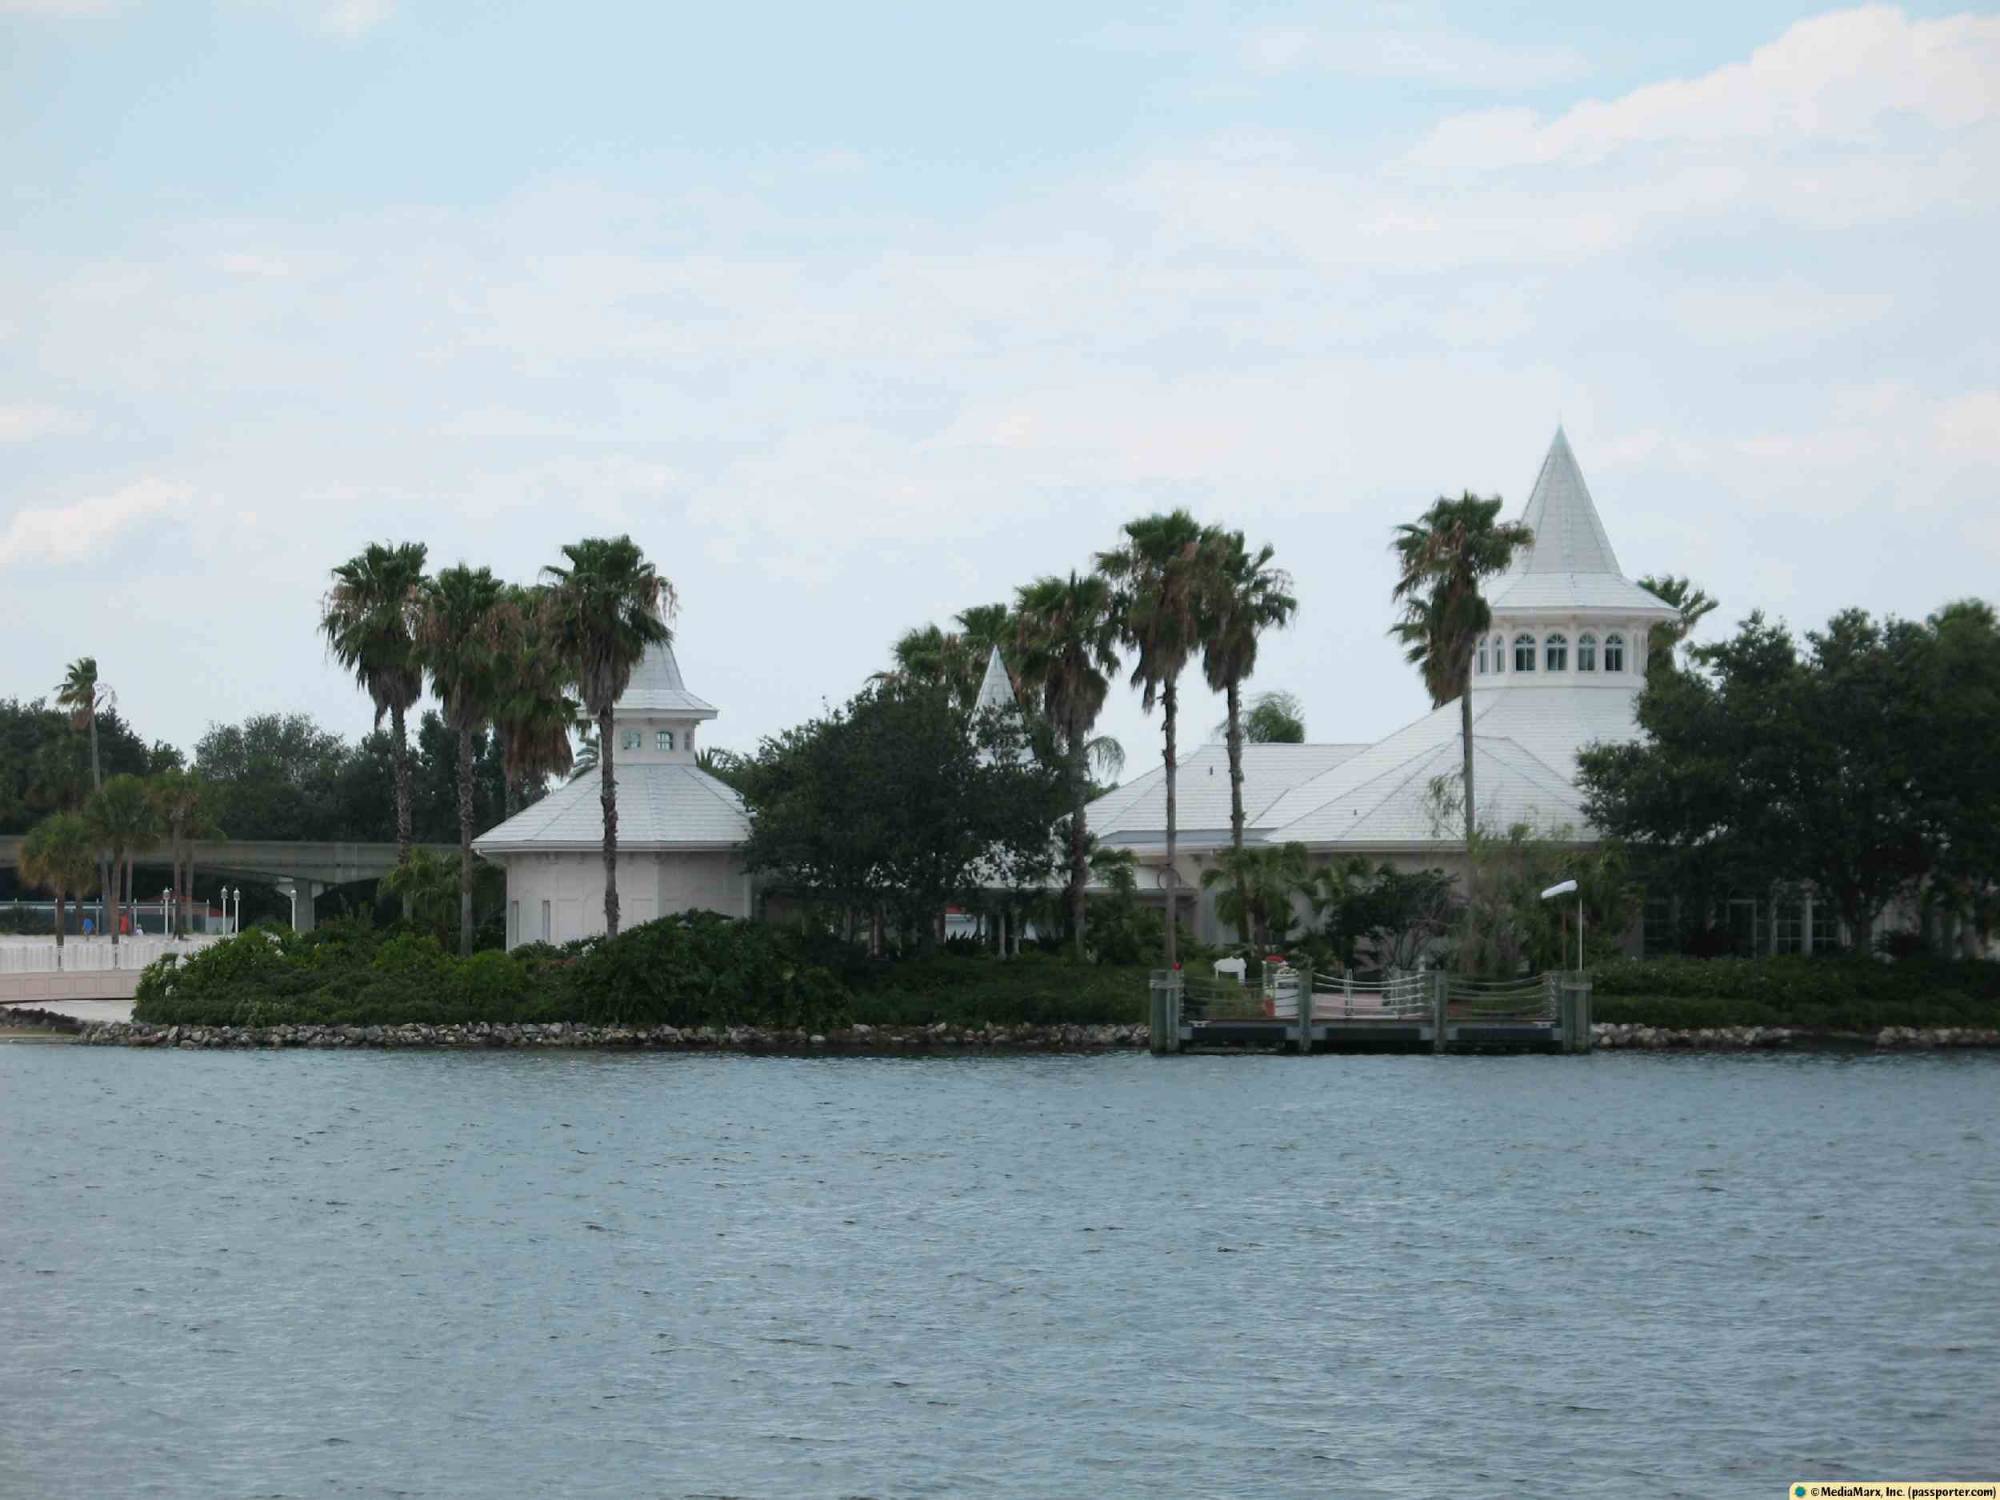 Wedding Pavilion - View Across Water